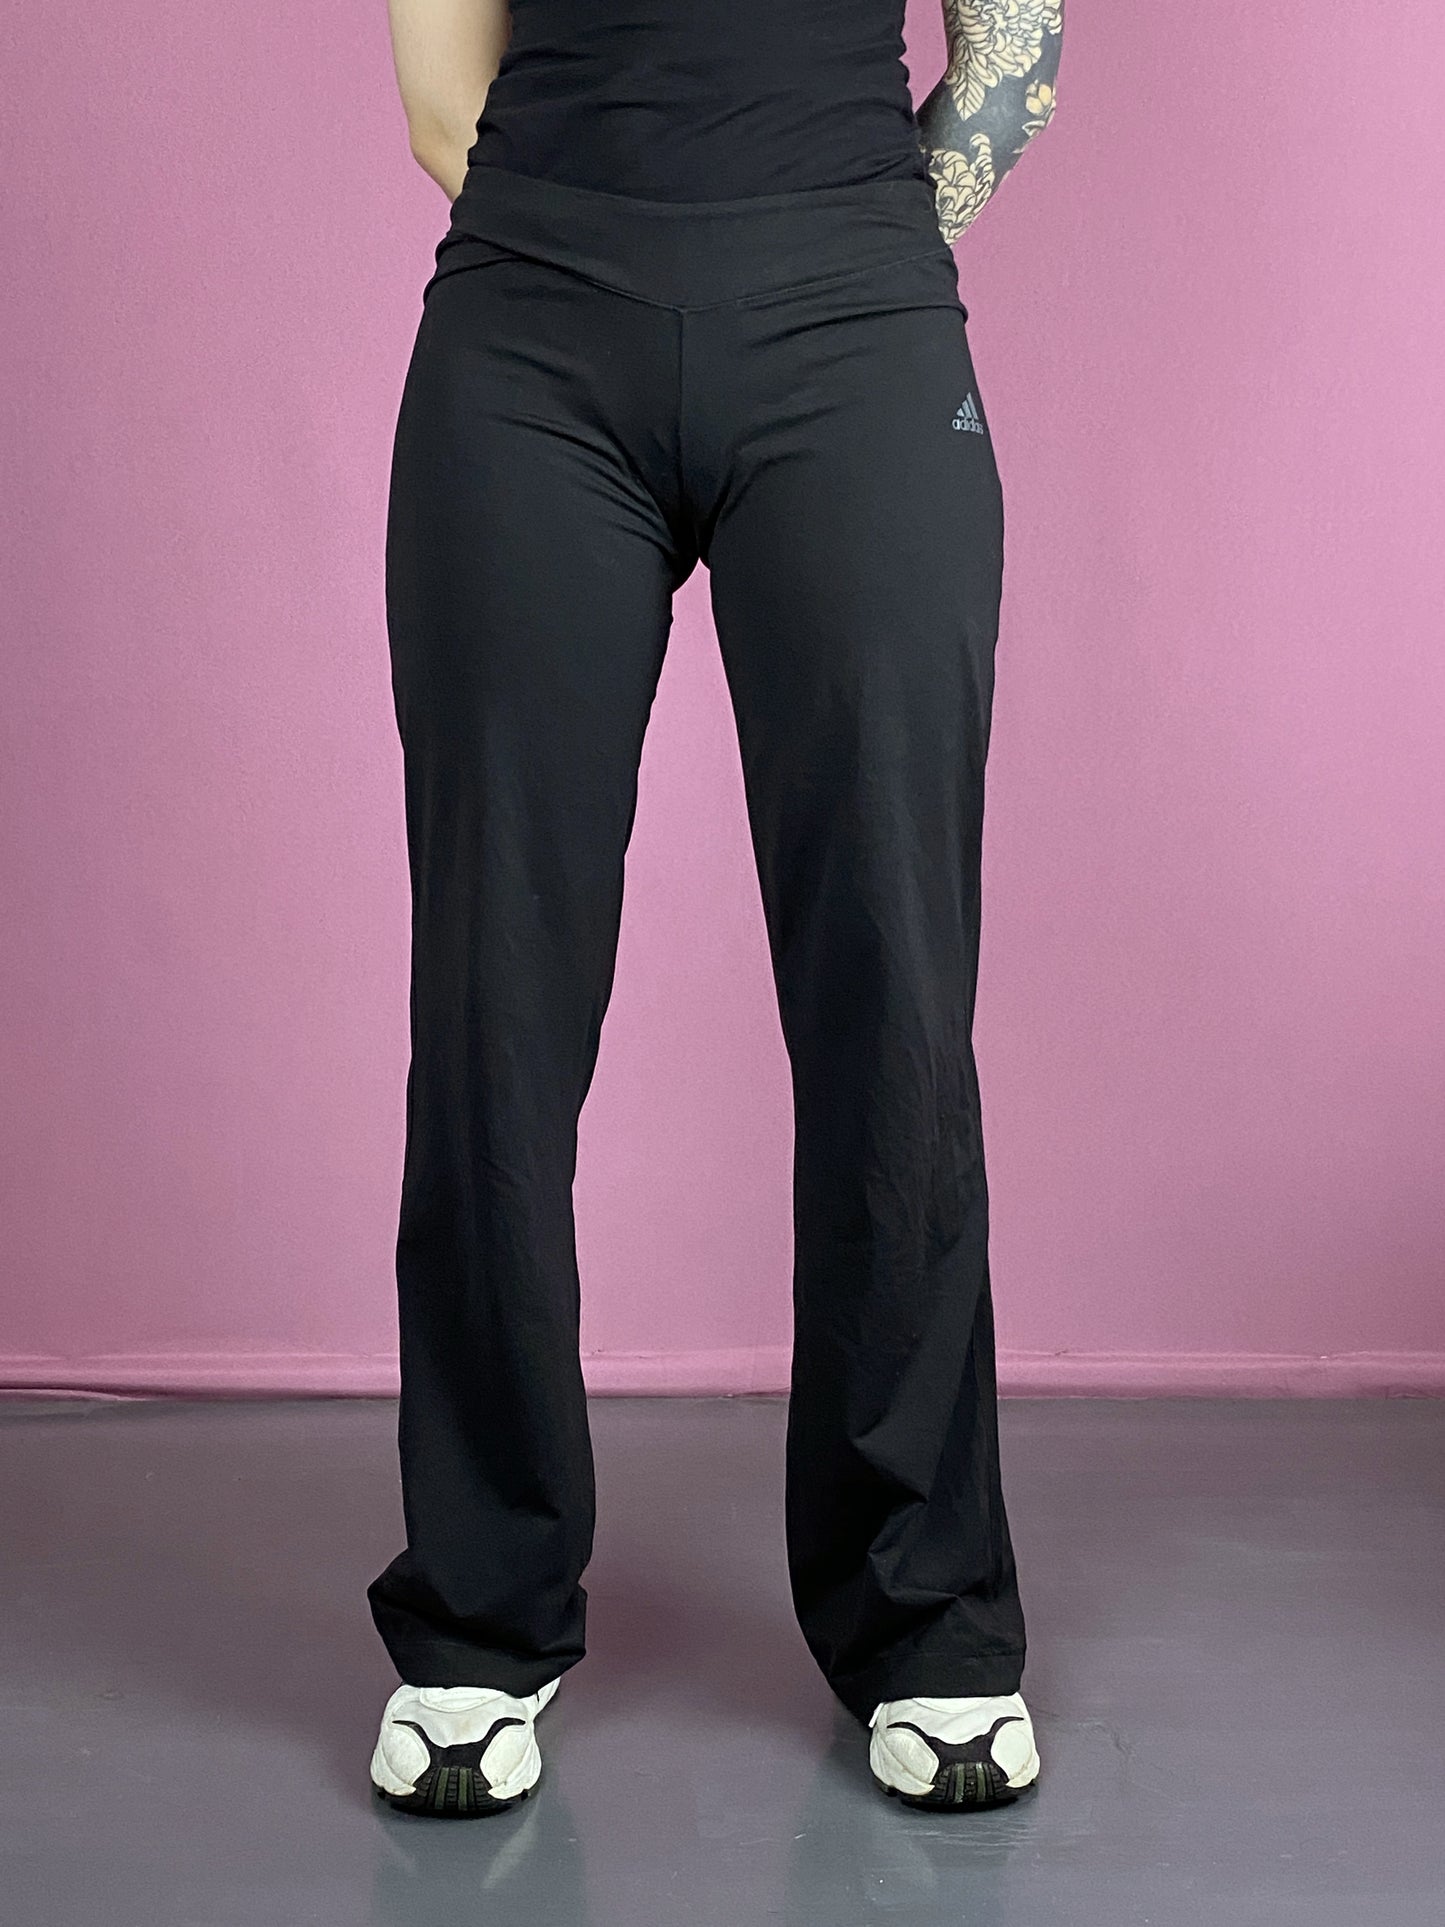 Adidas Performance Vintage Women's Flare Leggings - M Black Polyester Blend